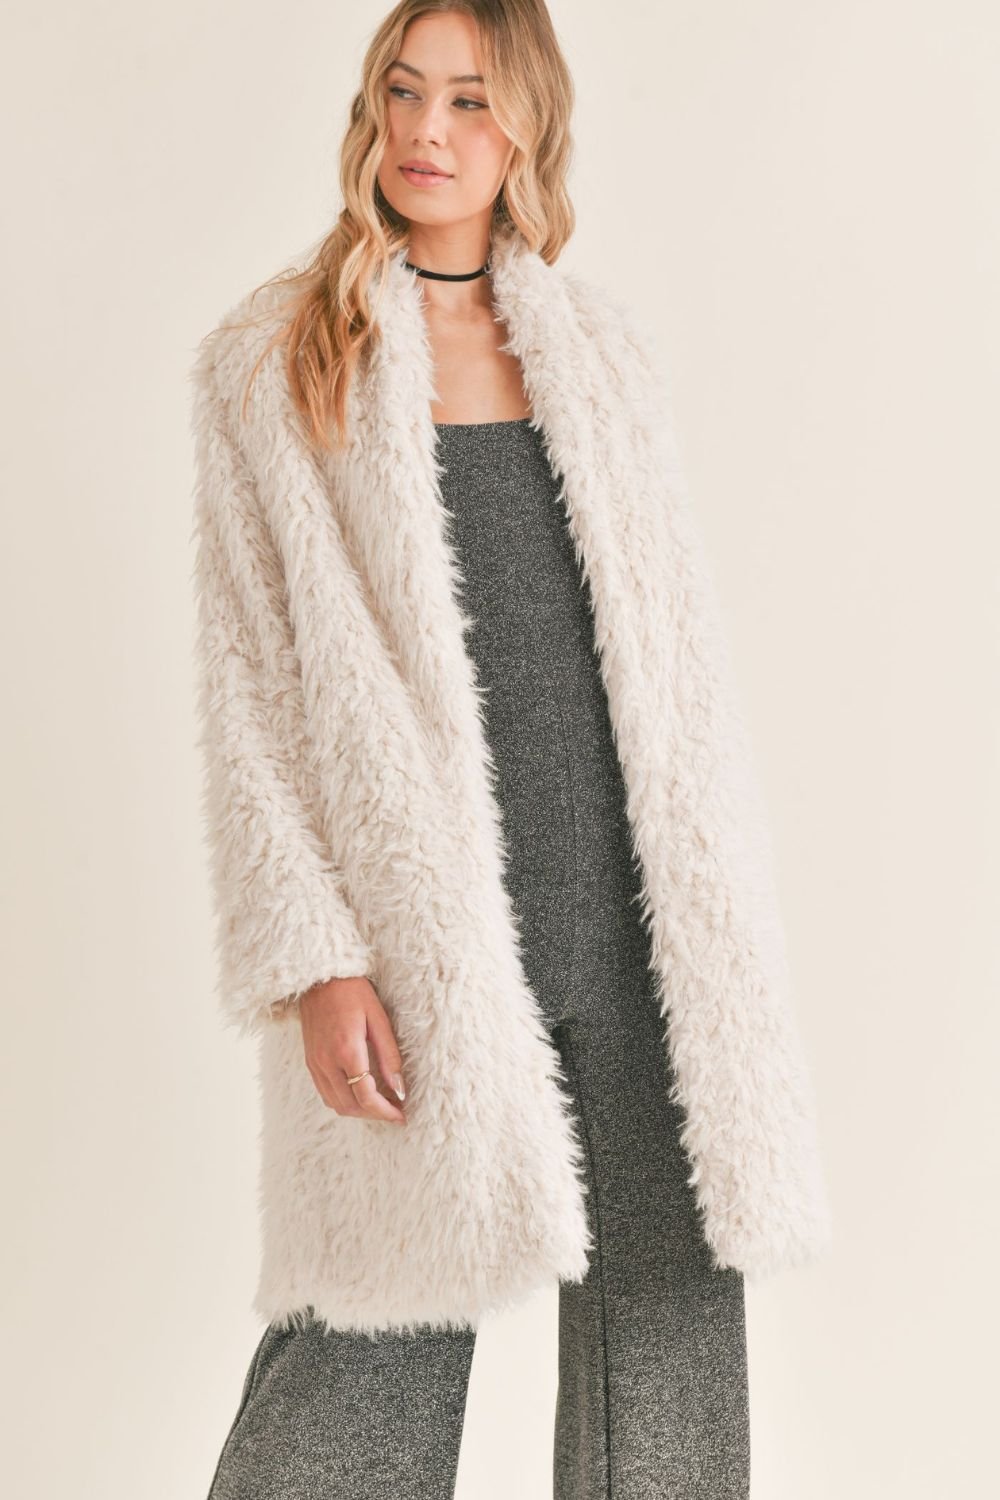 Women's Faux Fur Shaggy Long Coat | Ivory - Women's Coat - Blooming Daily